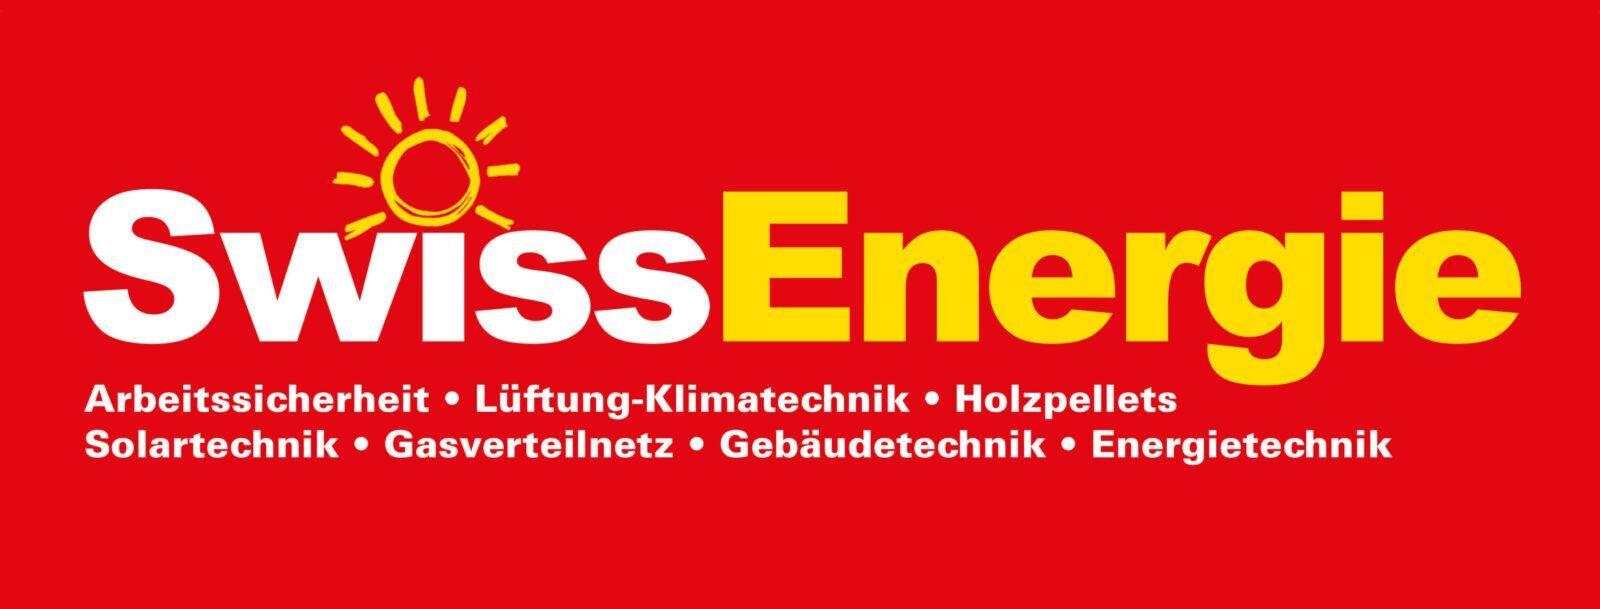 Swiss Energie / Gewerbeunion AG